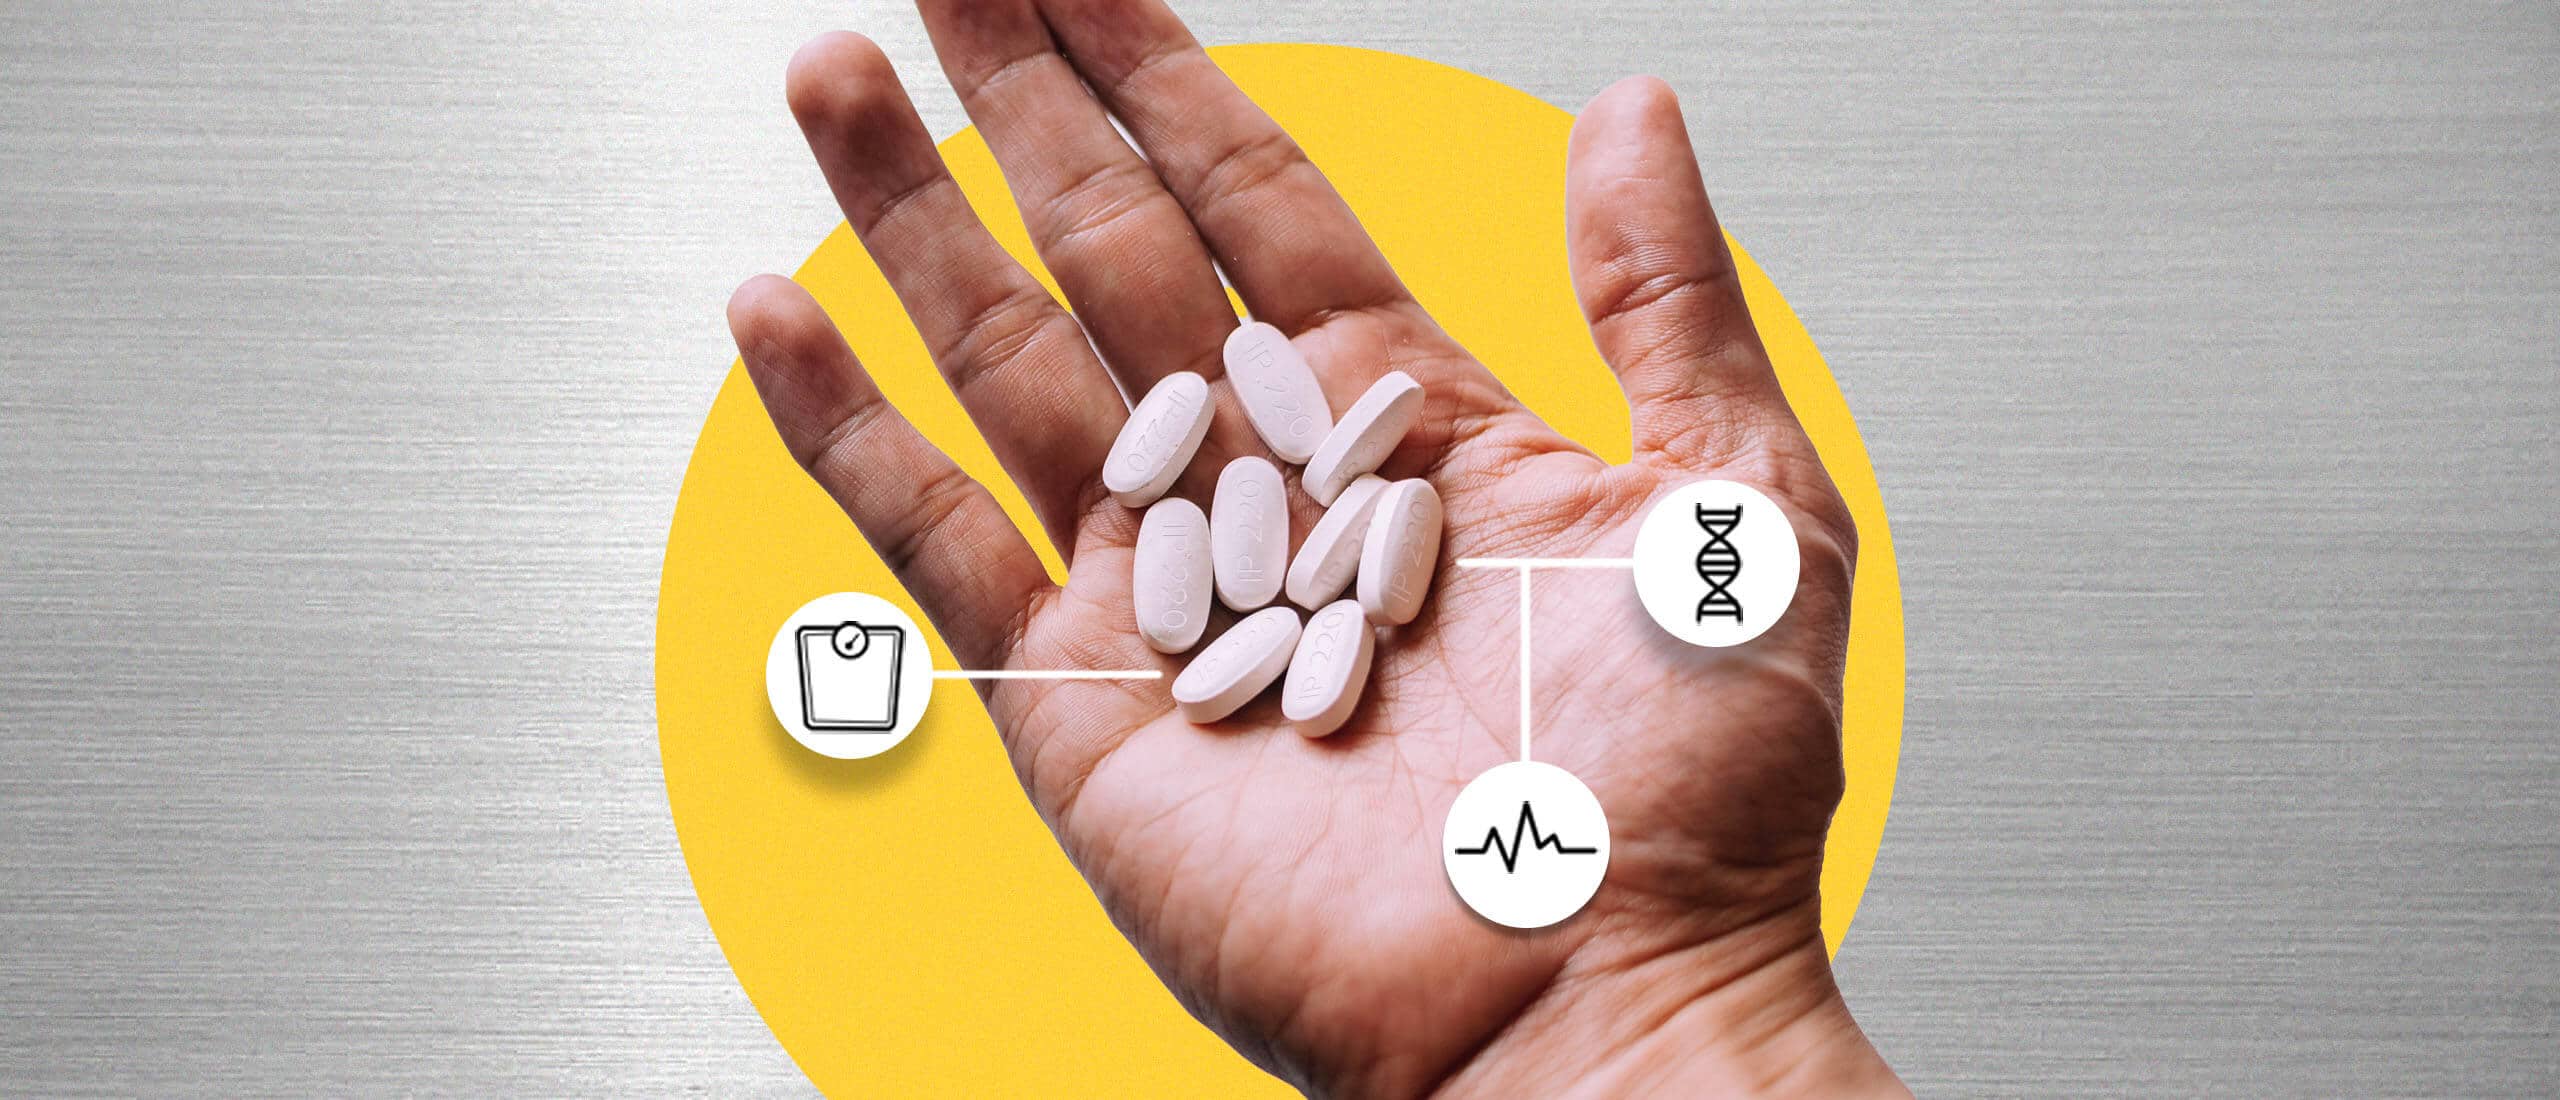 a hand holding metformin pills